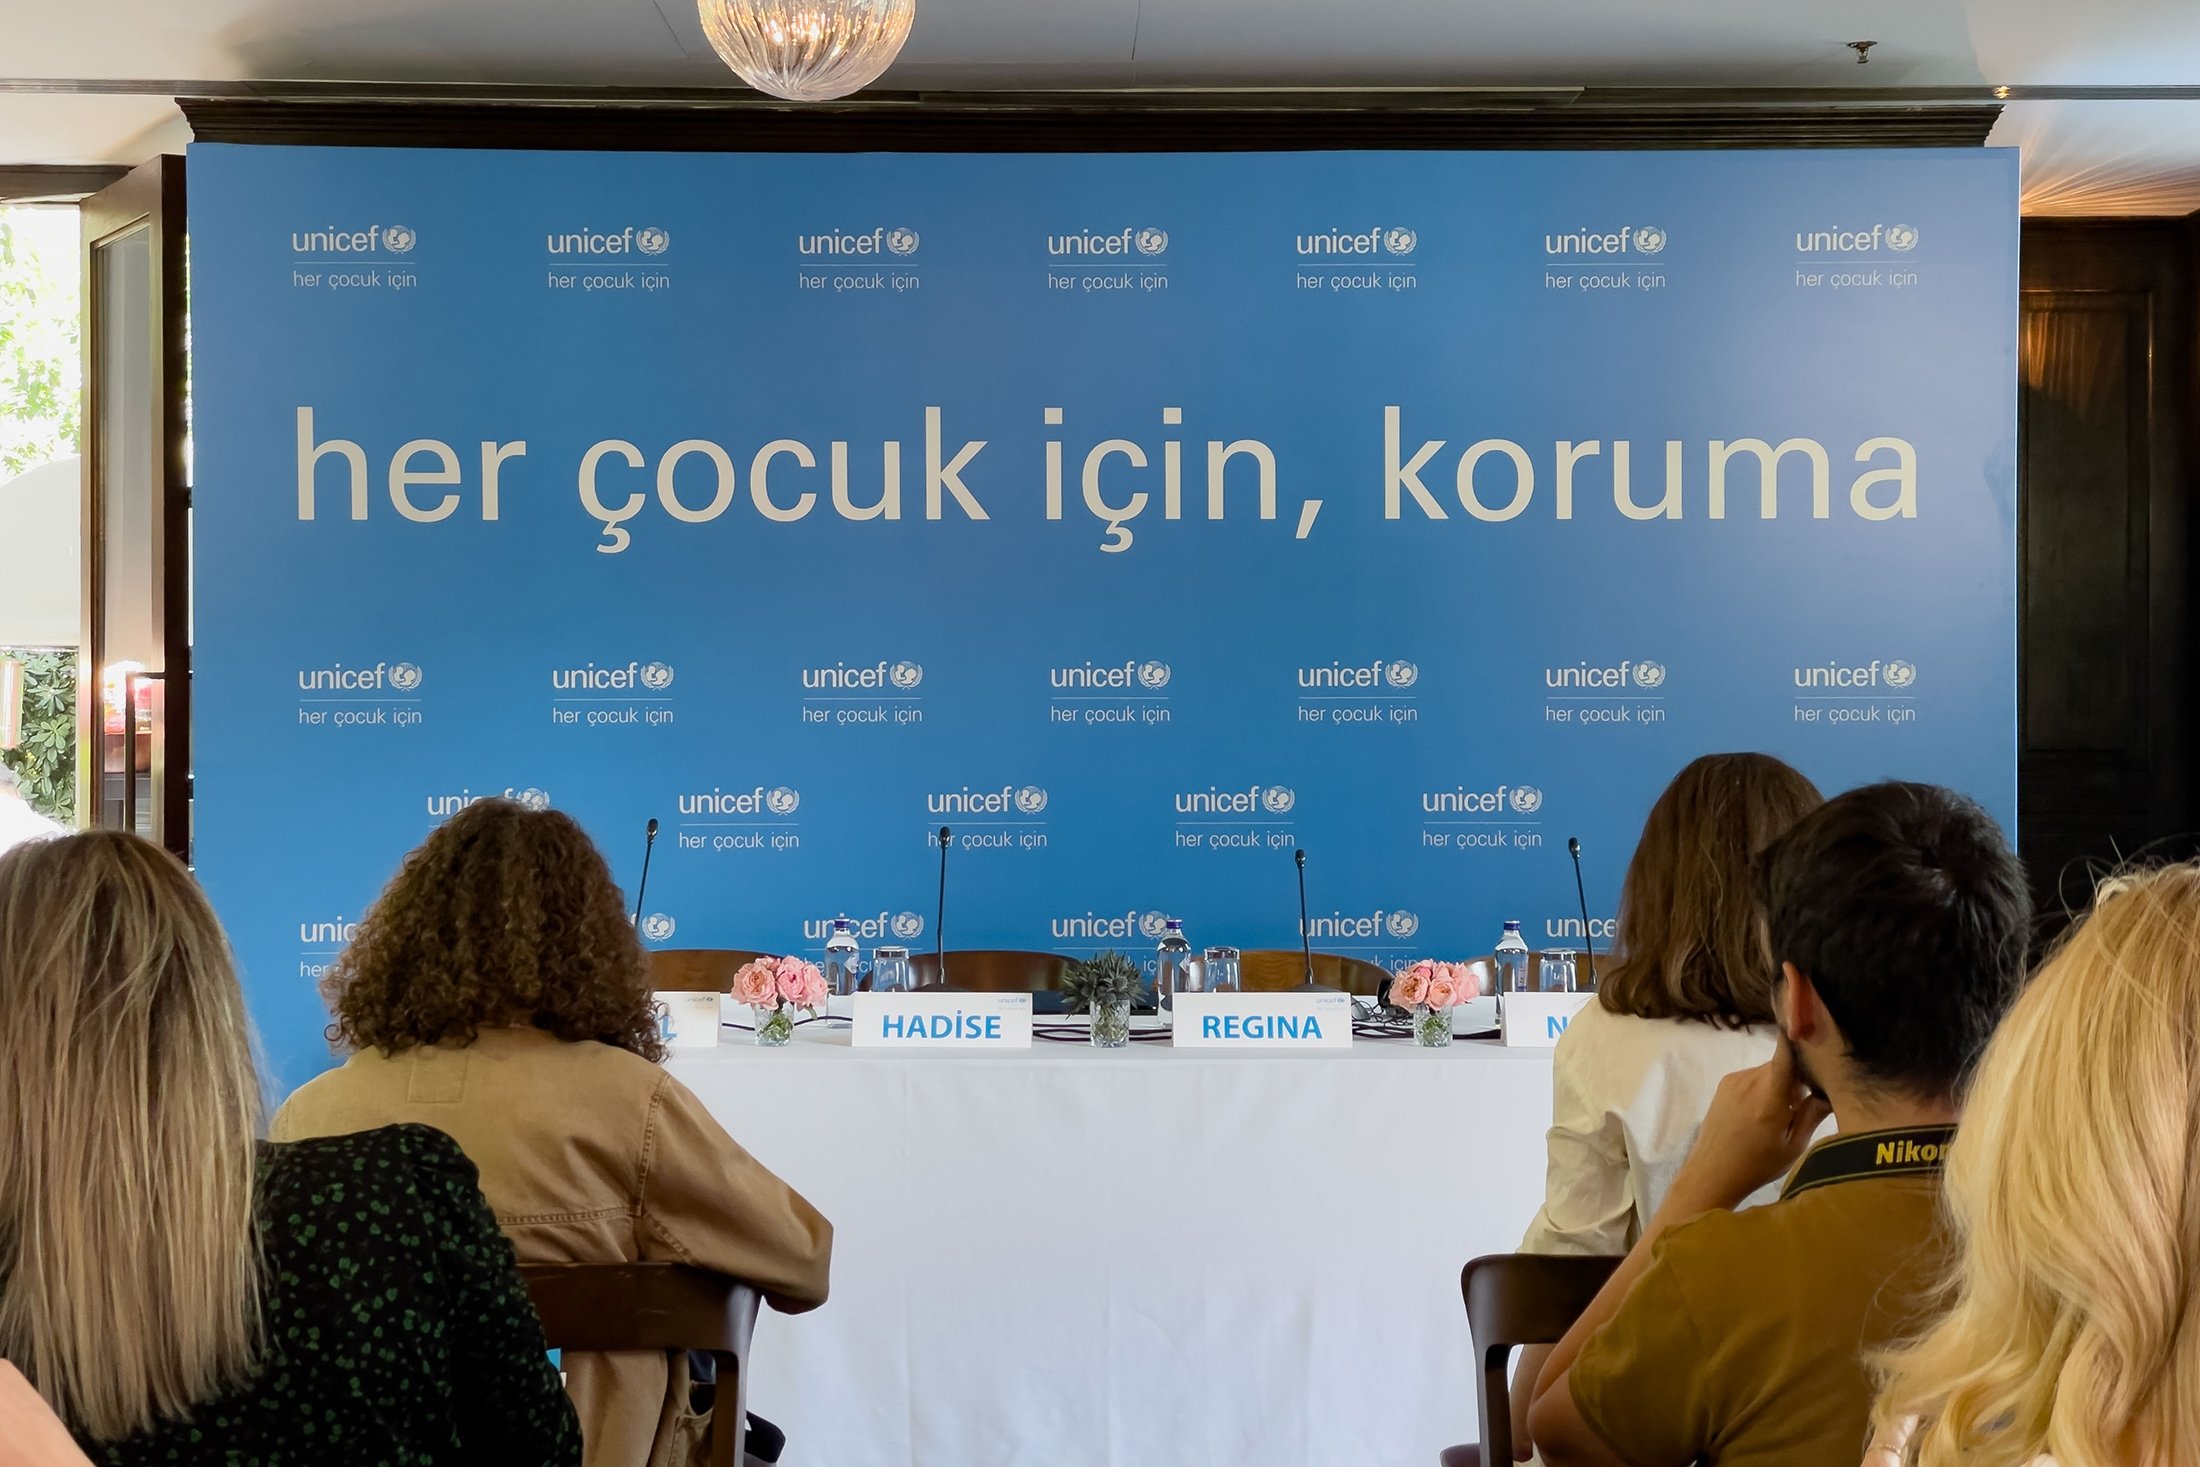 Anggota pers menunggu kedatangan Hadise untuk penunjukannya sebagai Advokat Hak Anak terbaru UNICEF Turki, di Istanbul, Turki, 7 Juli 2022. (Foto oleh Ahmet Koçak dari Daily Sabah)